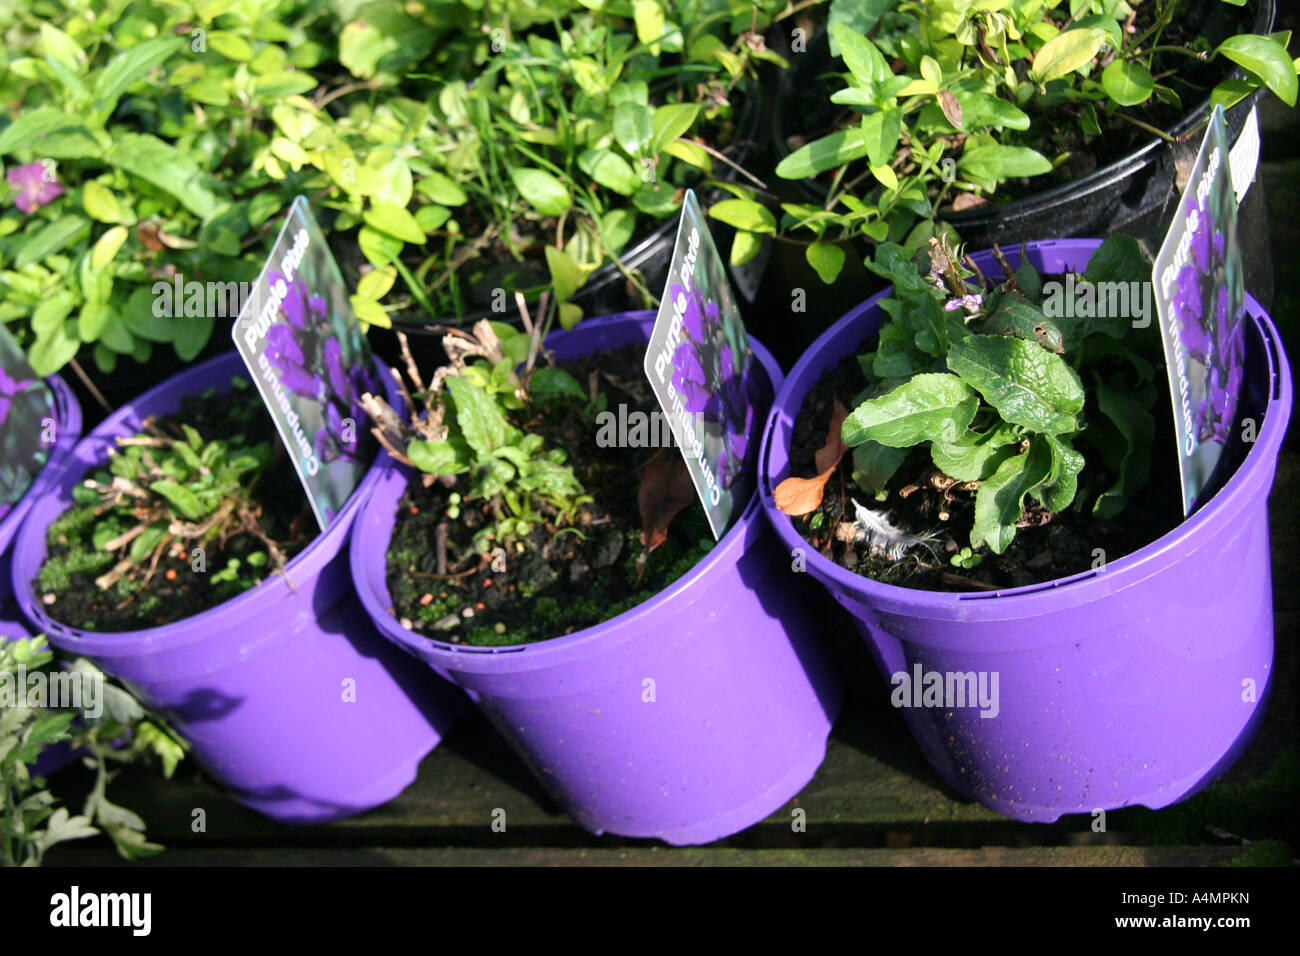 Purple plantpots with young campanula plants Stock Photo